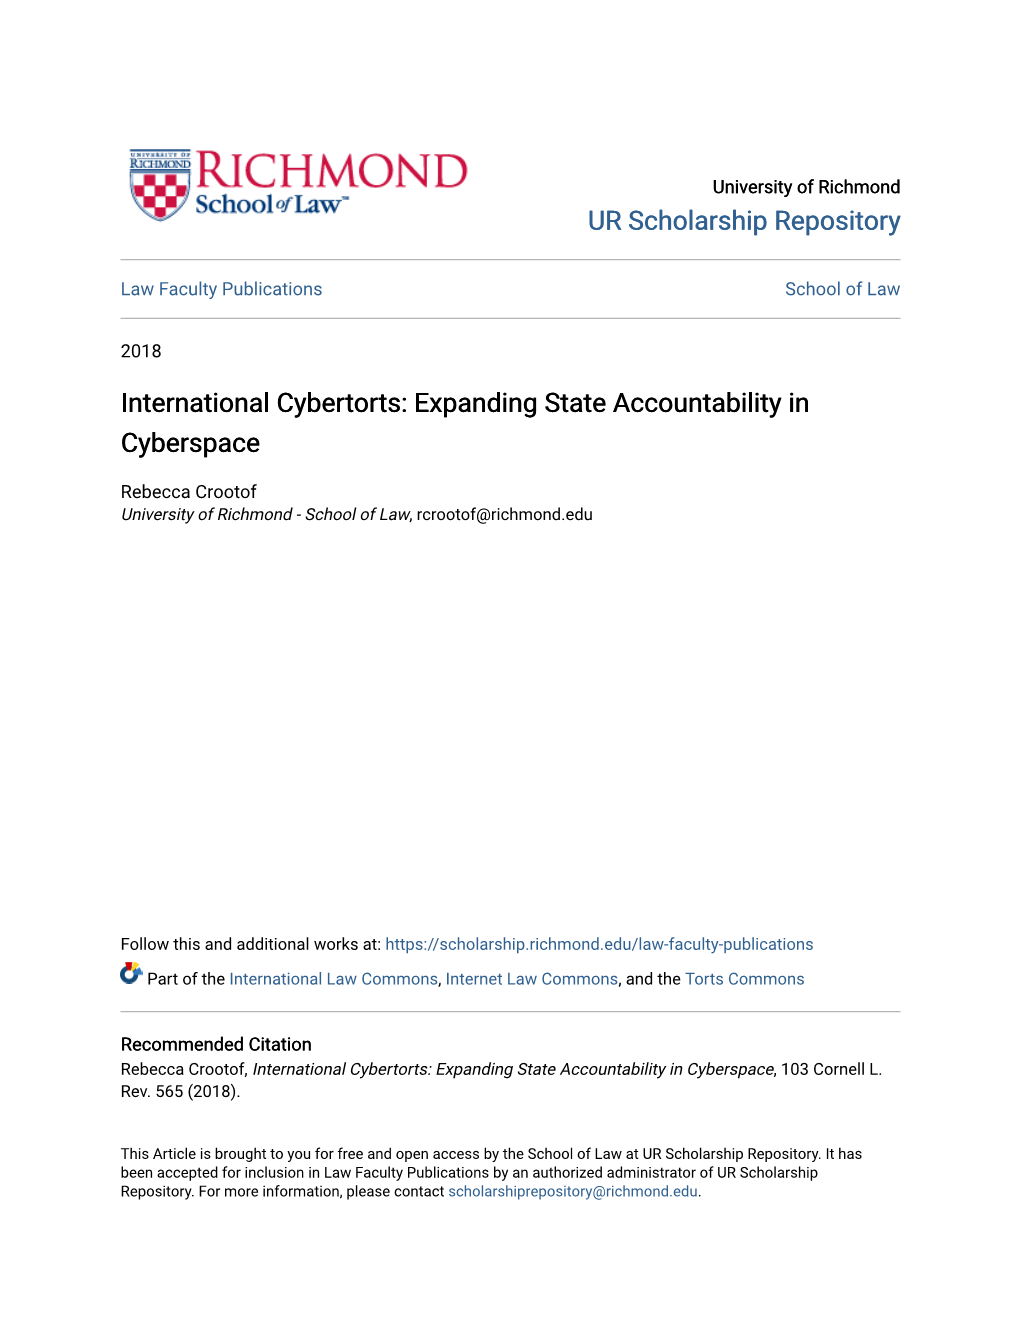 International Cybertorts: Expanding State Accountability in Cyberspace